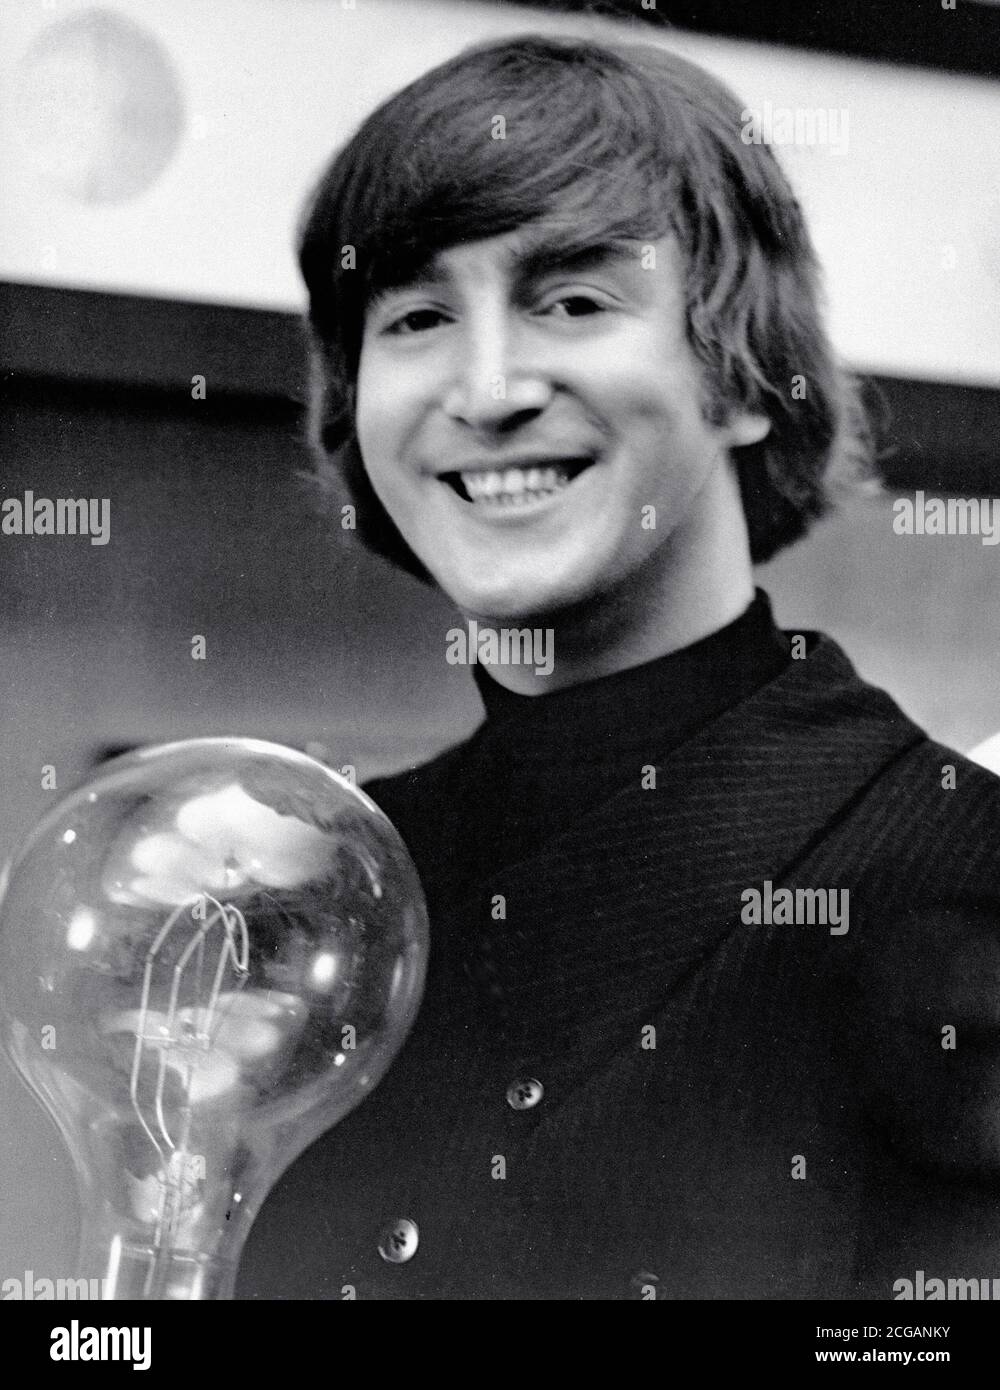 John Lennon, 'A Hard Day's Night' (1964) United Artists / Aktenzeichen # 34000-402THA Stockfoto